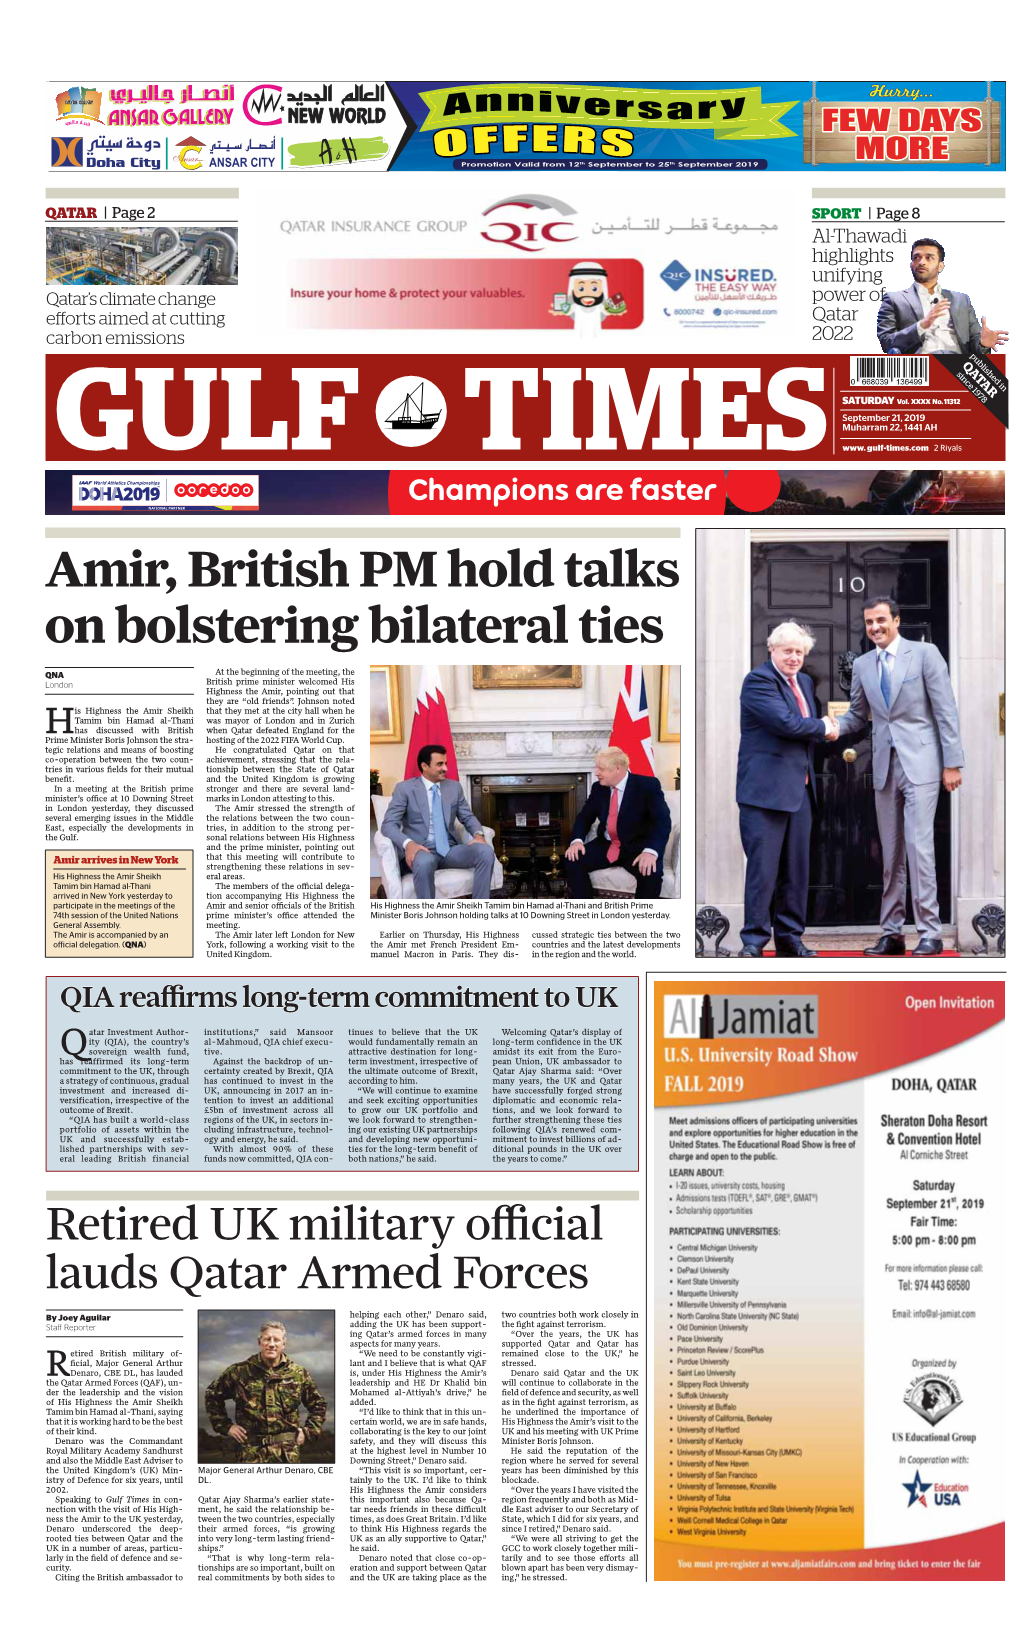 Amir, British PM Hold Talks on Bolstering Bilateral Ties